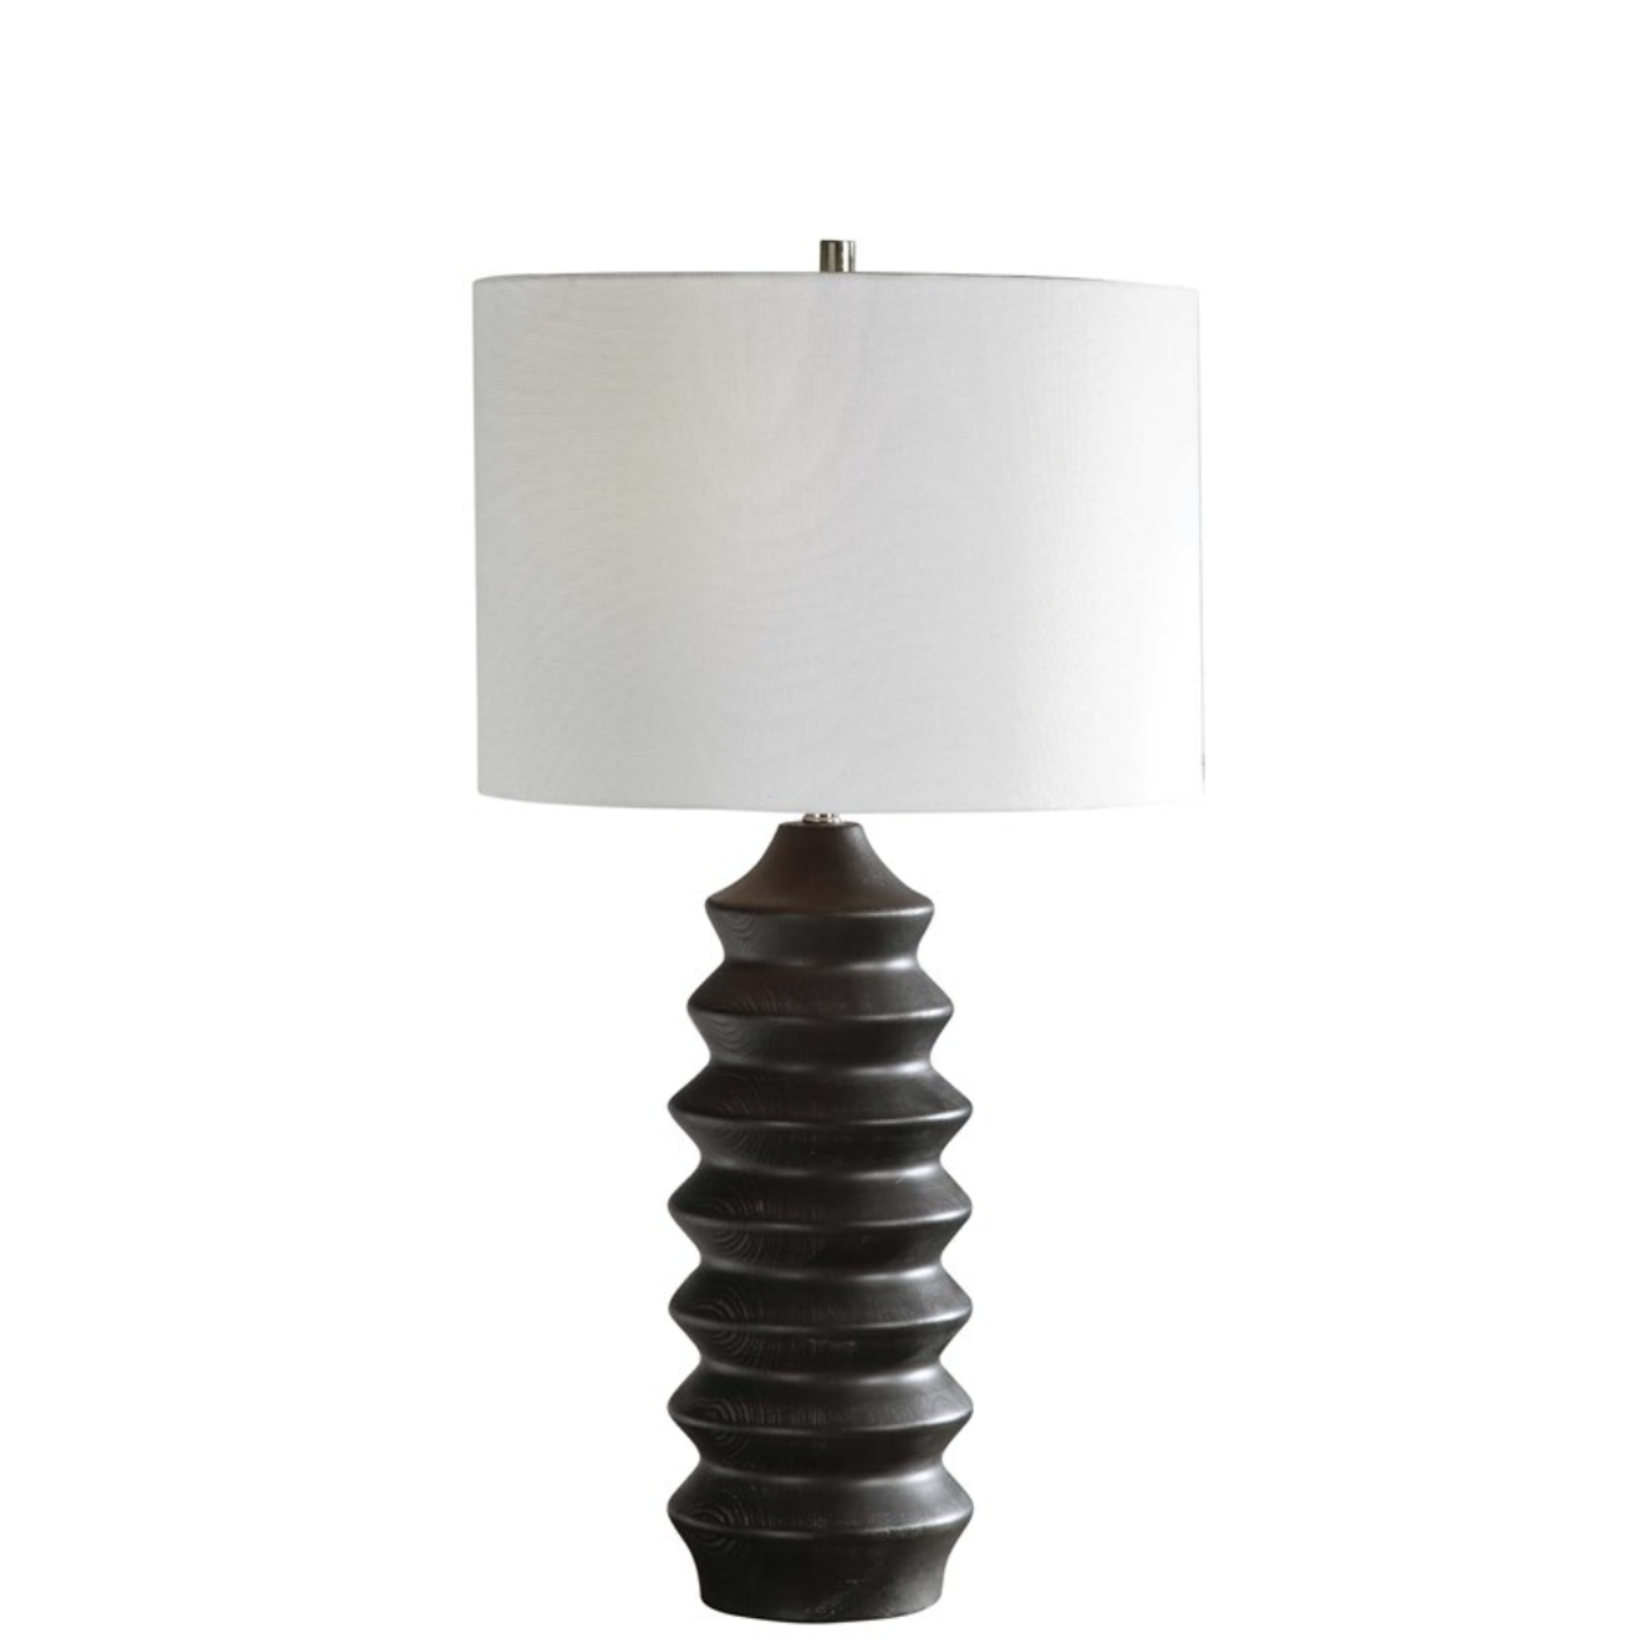 30" Uttermost Mendocino Table Lamp